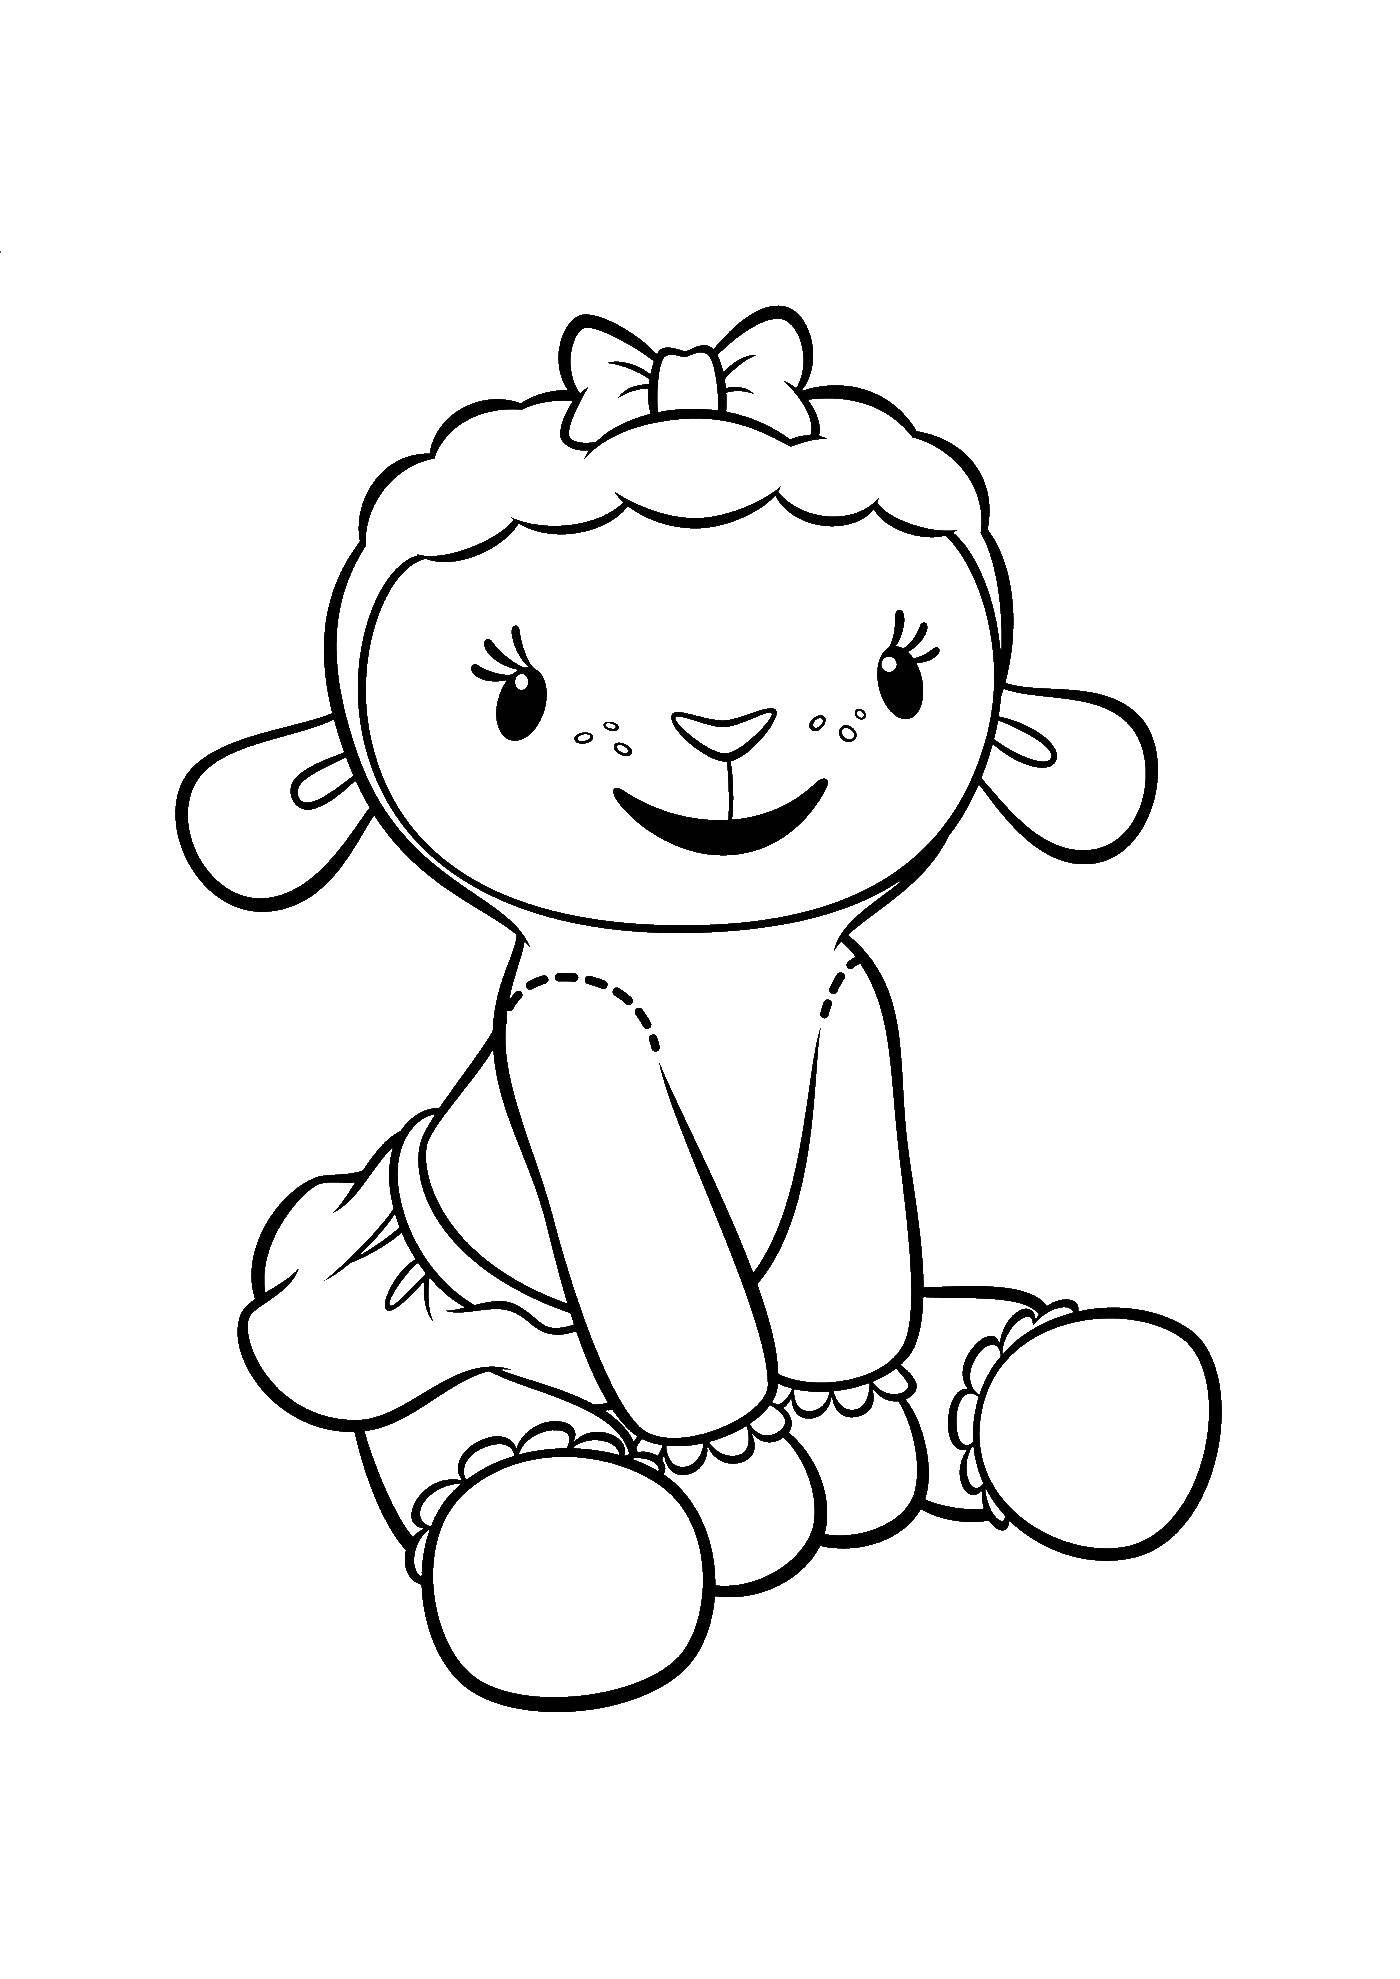 Coloring Lammy plush lamb. Category coloring. Tags:  Lammy, Doc mcstuffins.